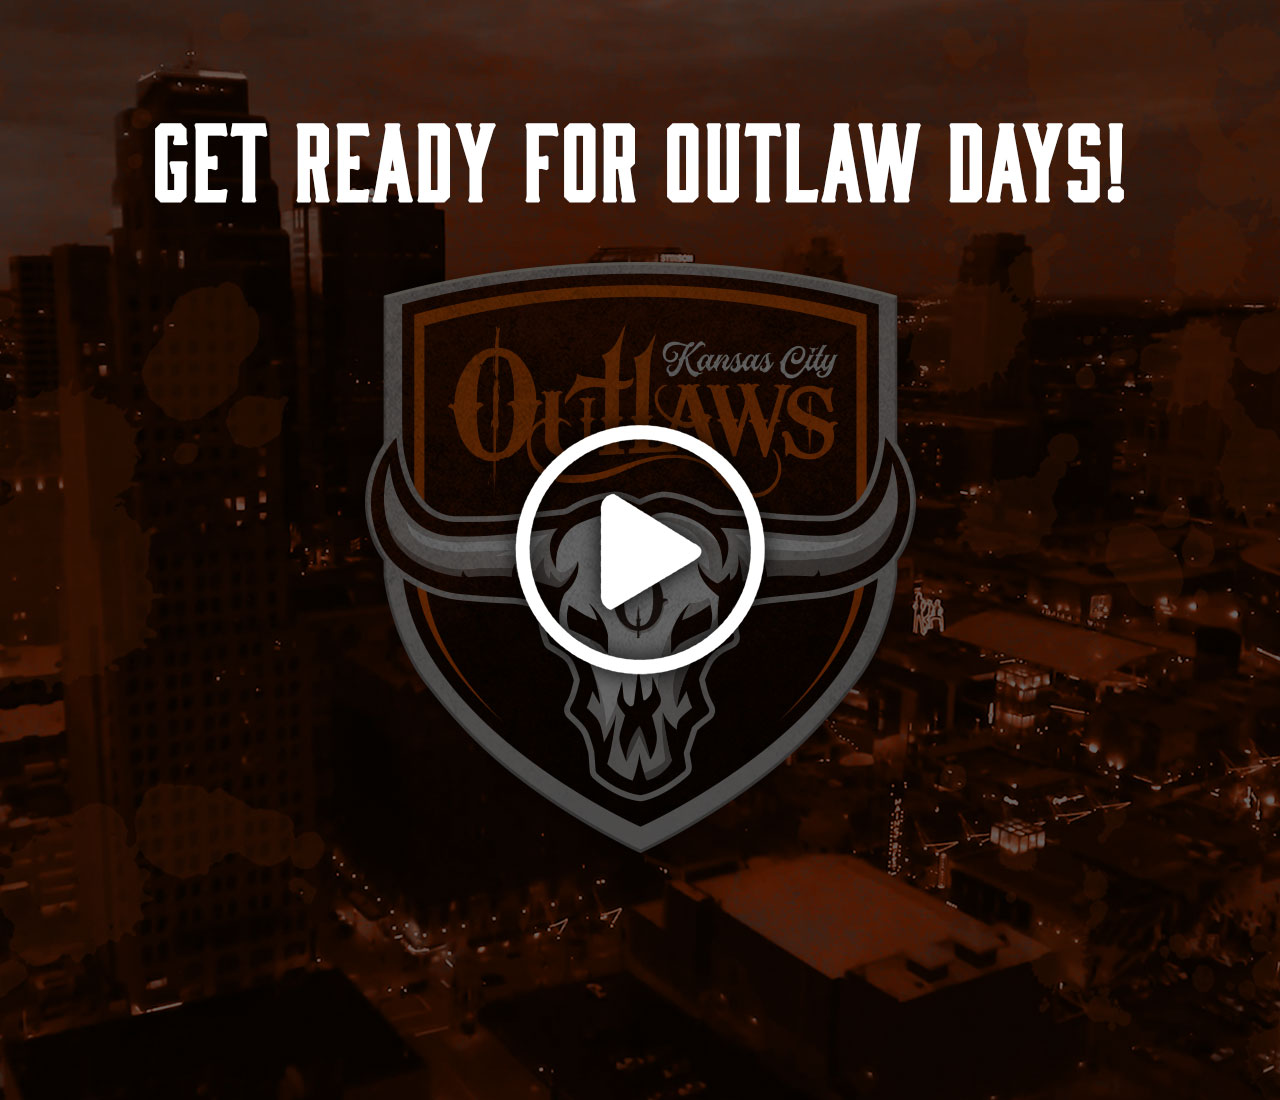 Outlaw Days coming back to Kansas City Missouri